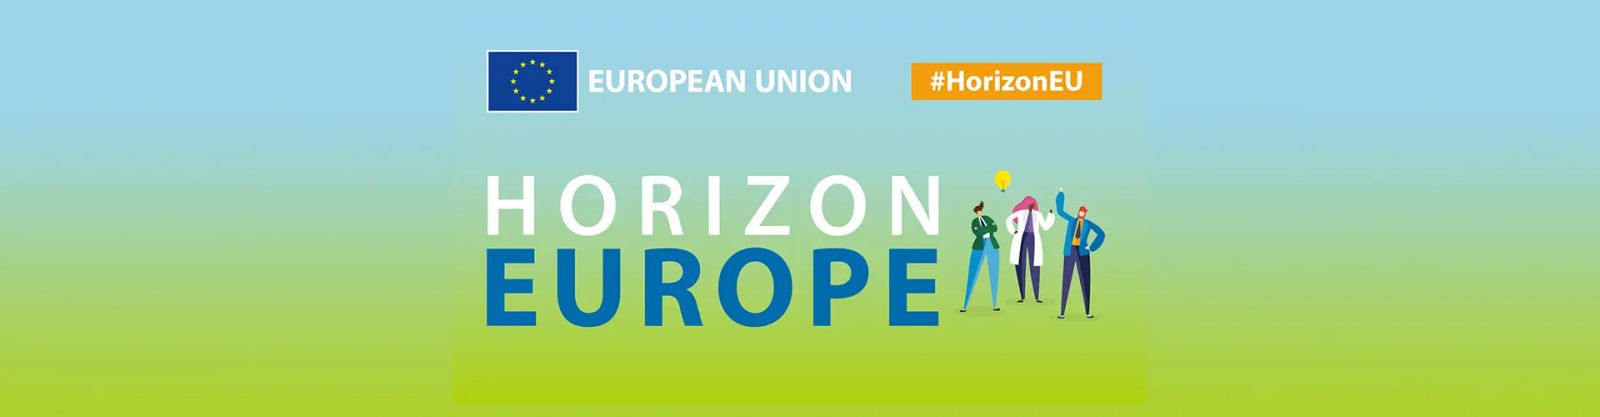 banner horizon europe